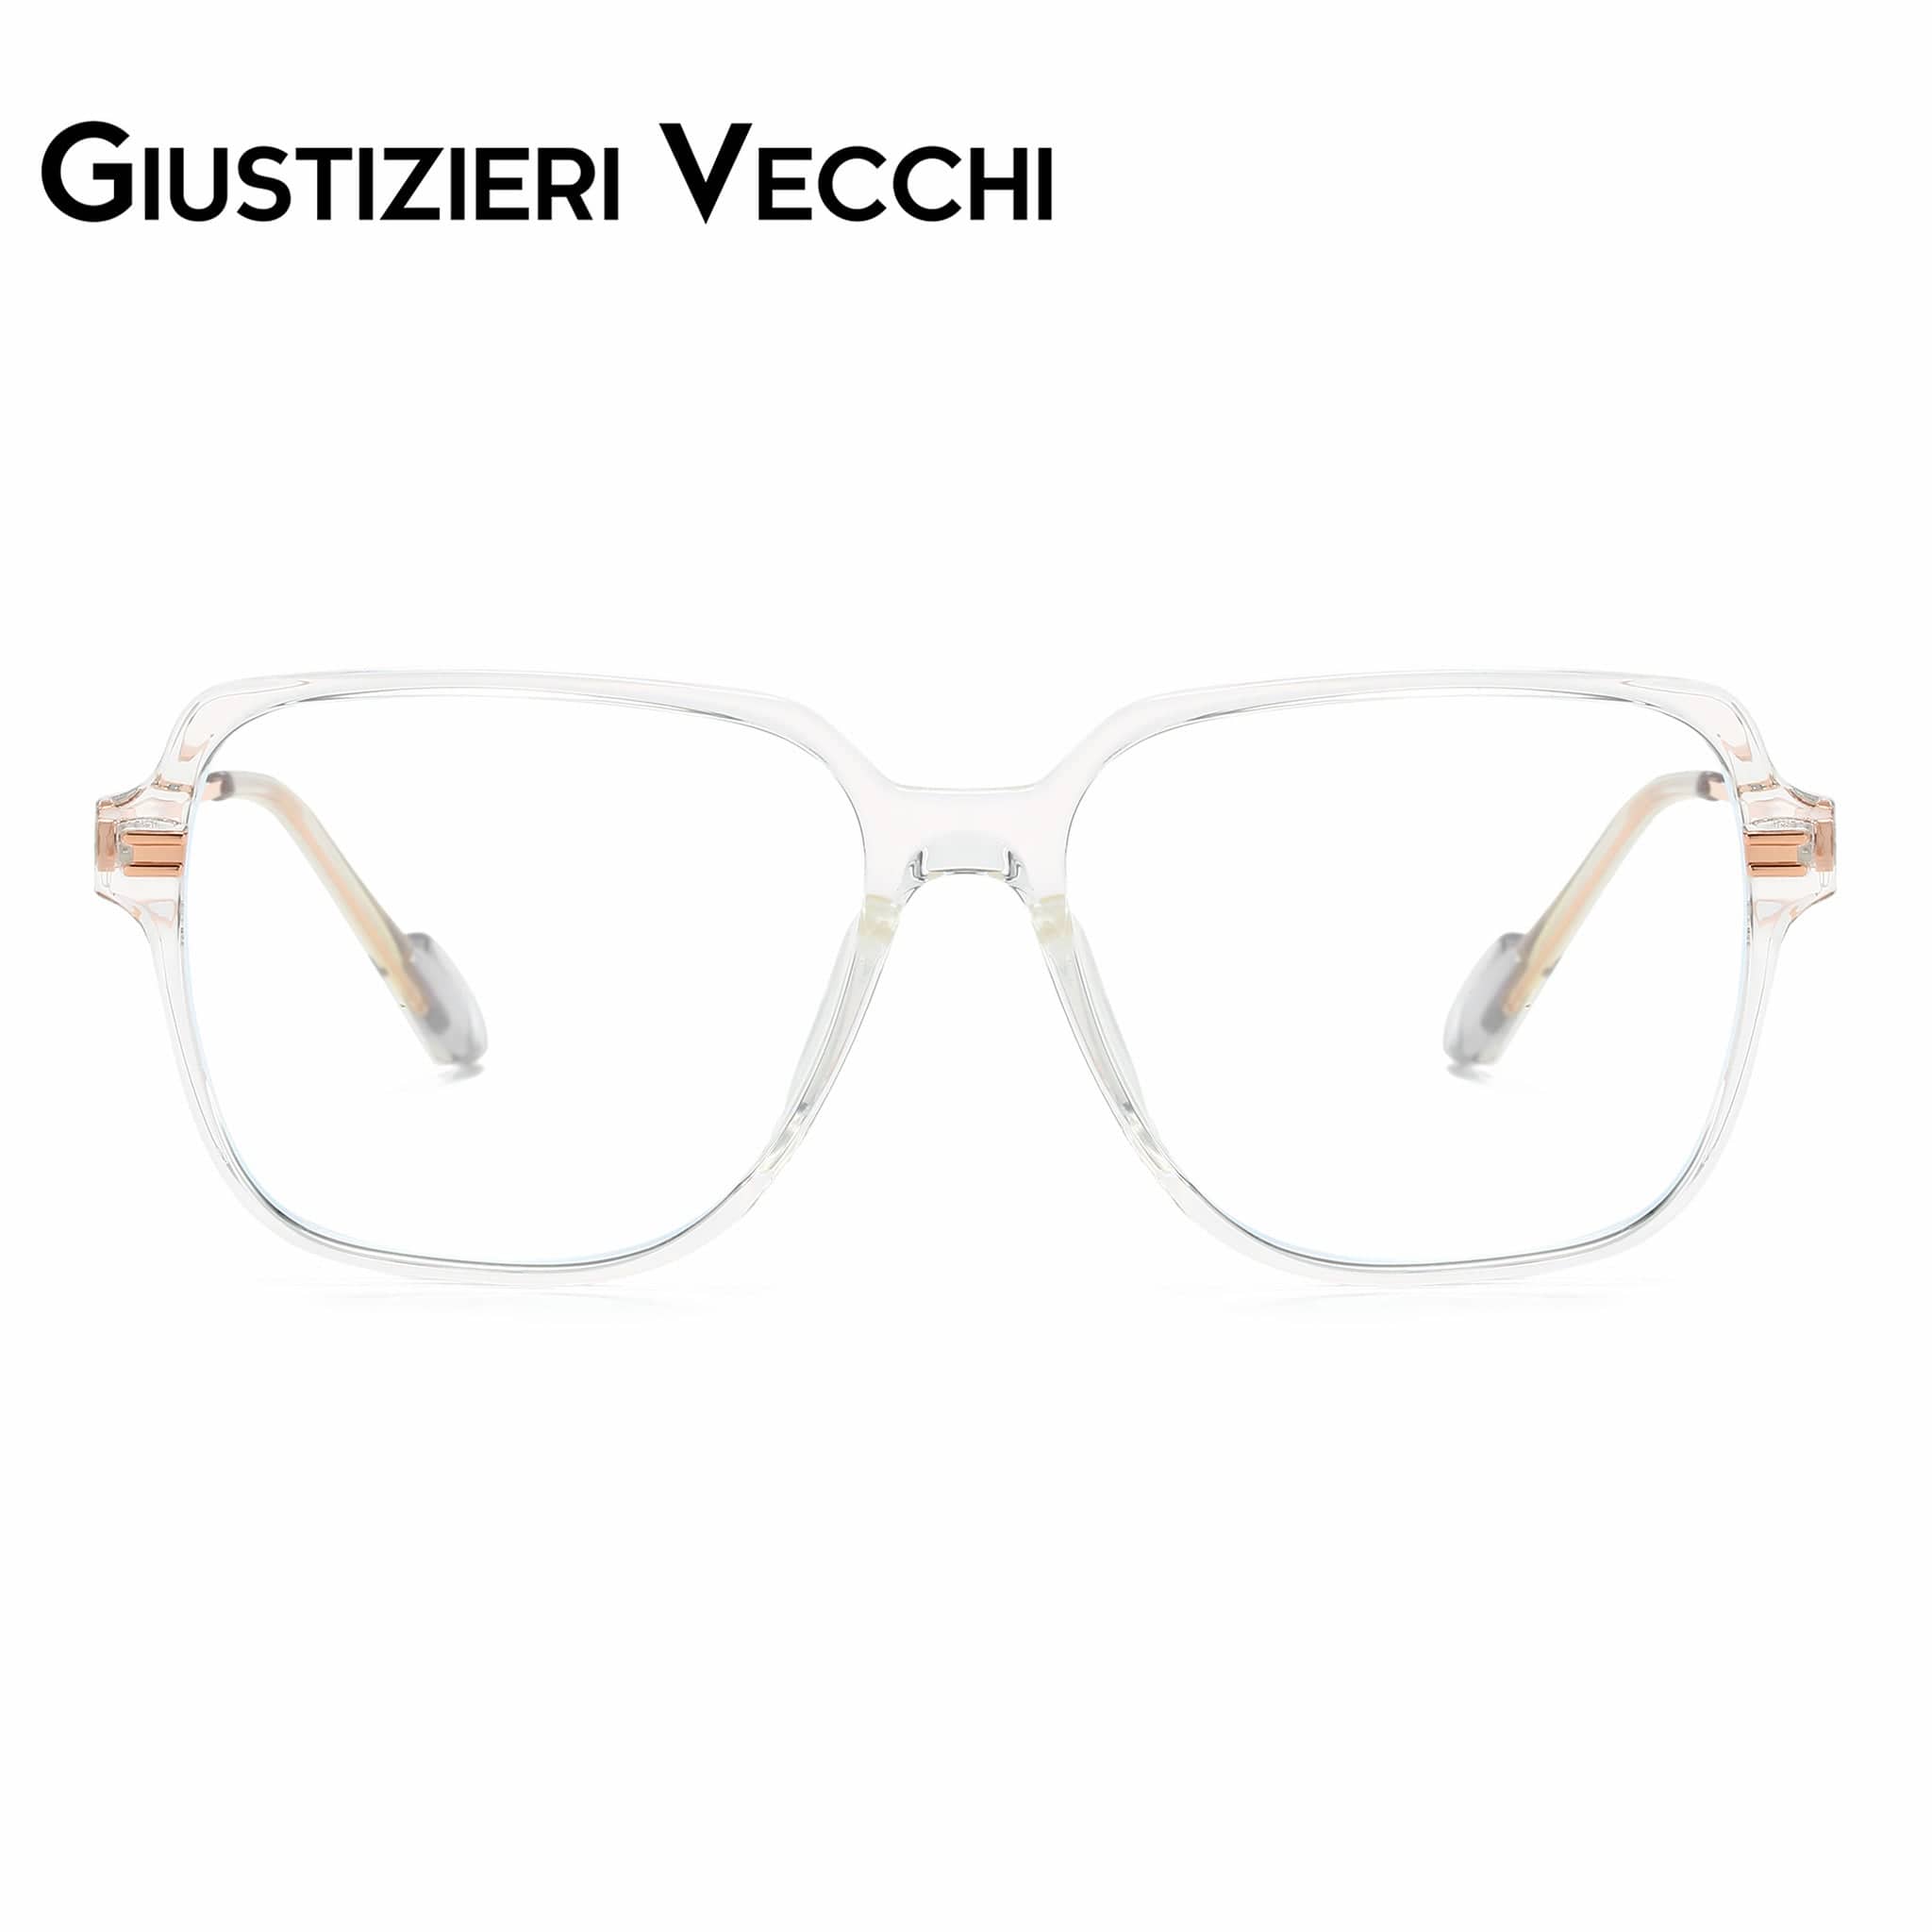 GIUSTIZIERI VECCHI Eyeglasses Large / Clear Crystal MysticRider Duo